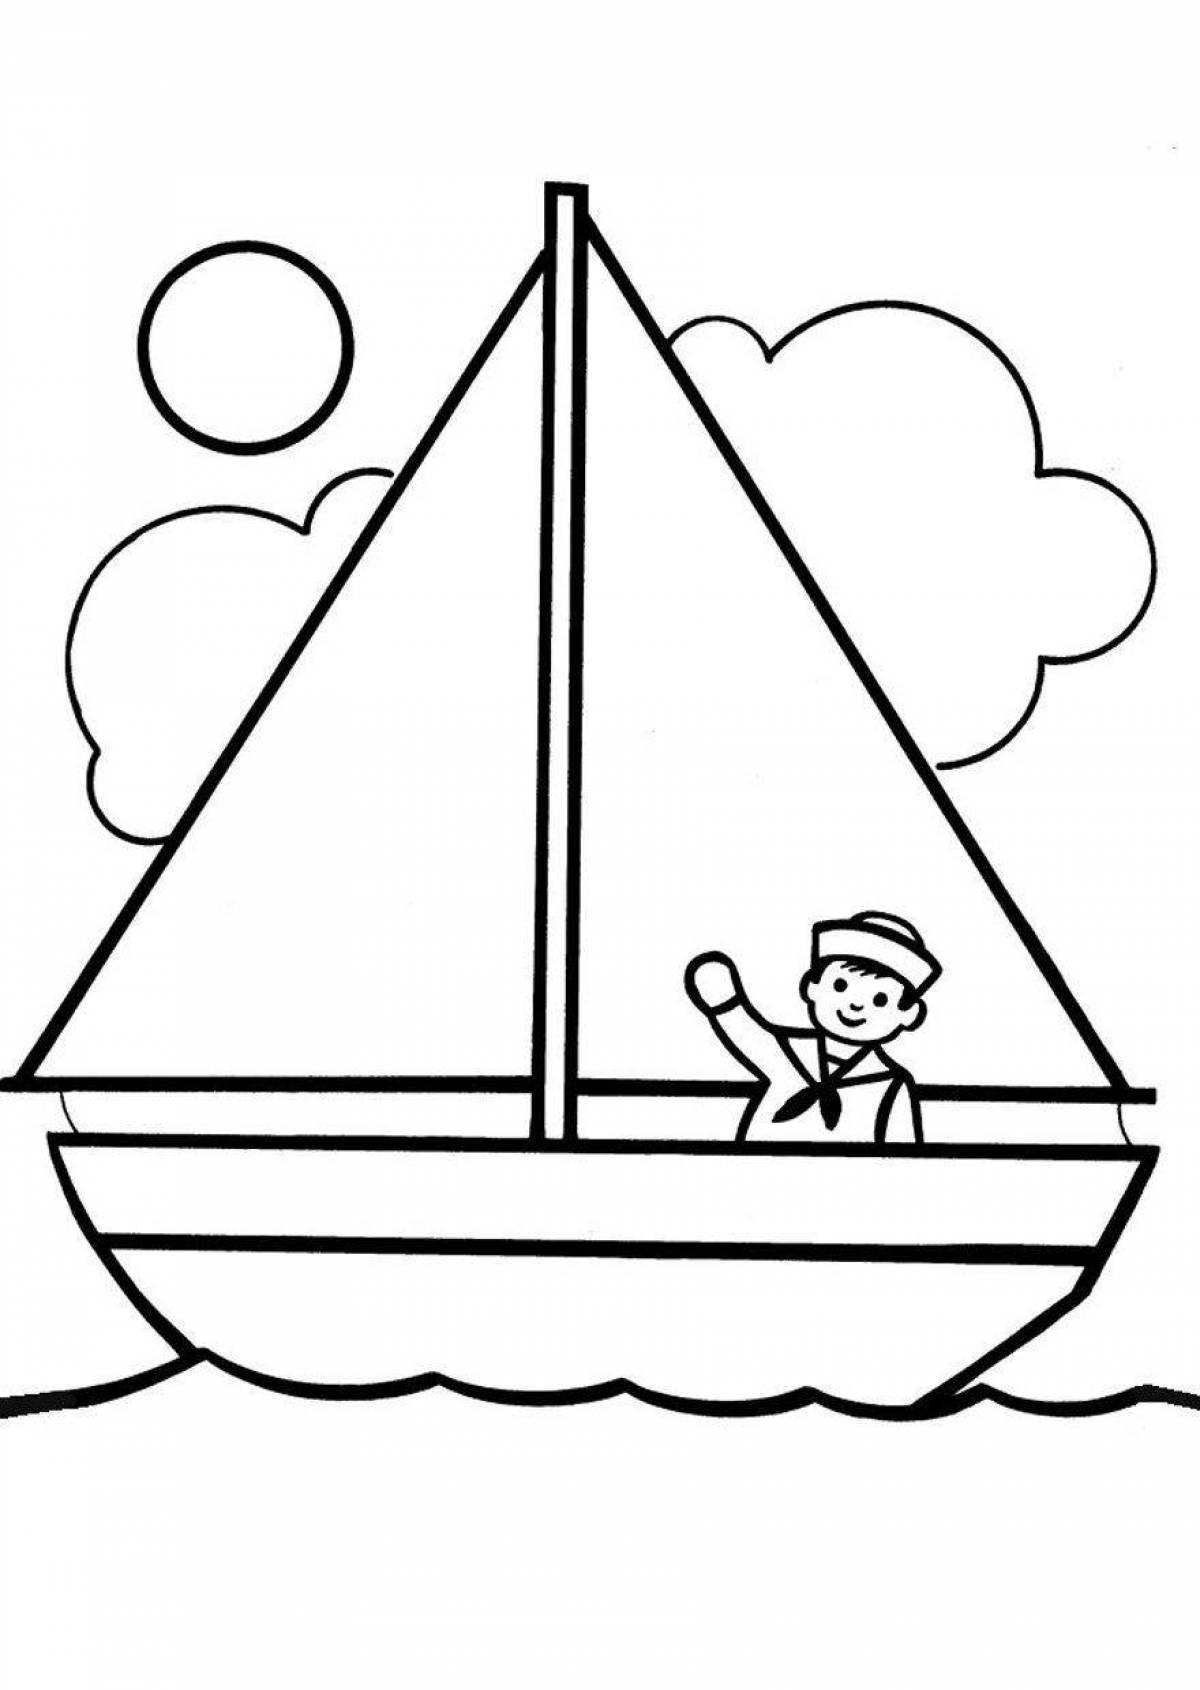 Coloring page elegant boat for kids